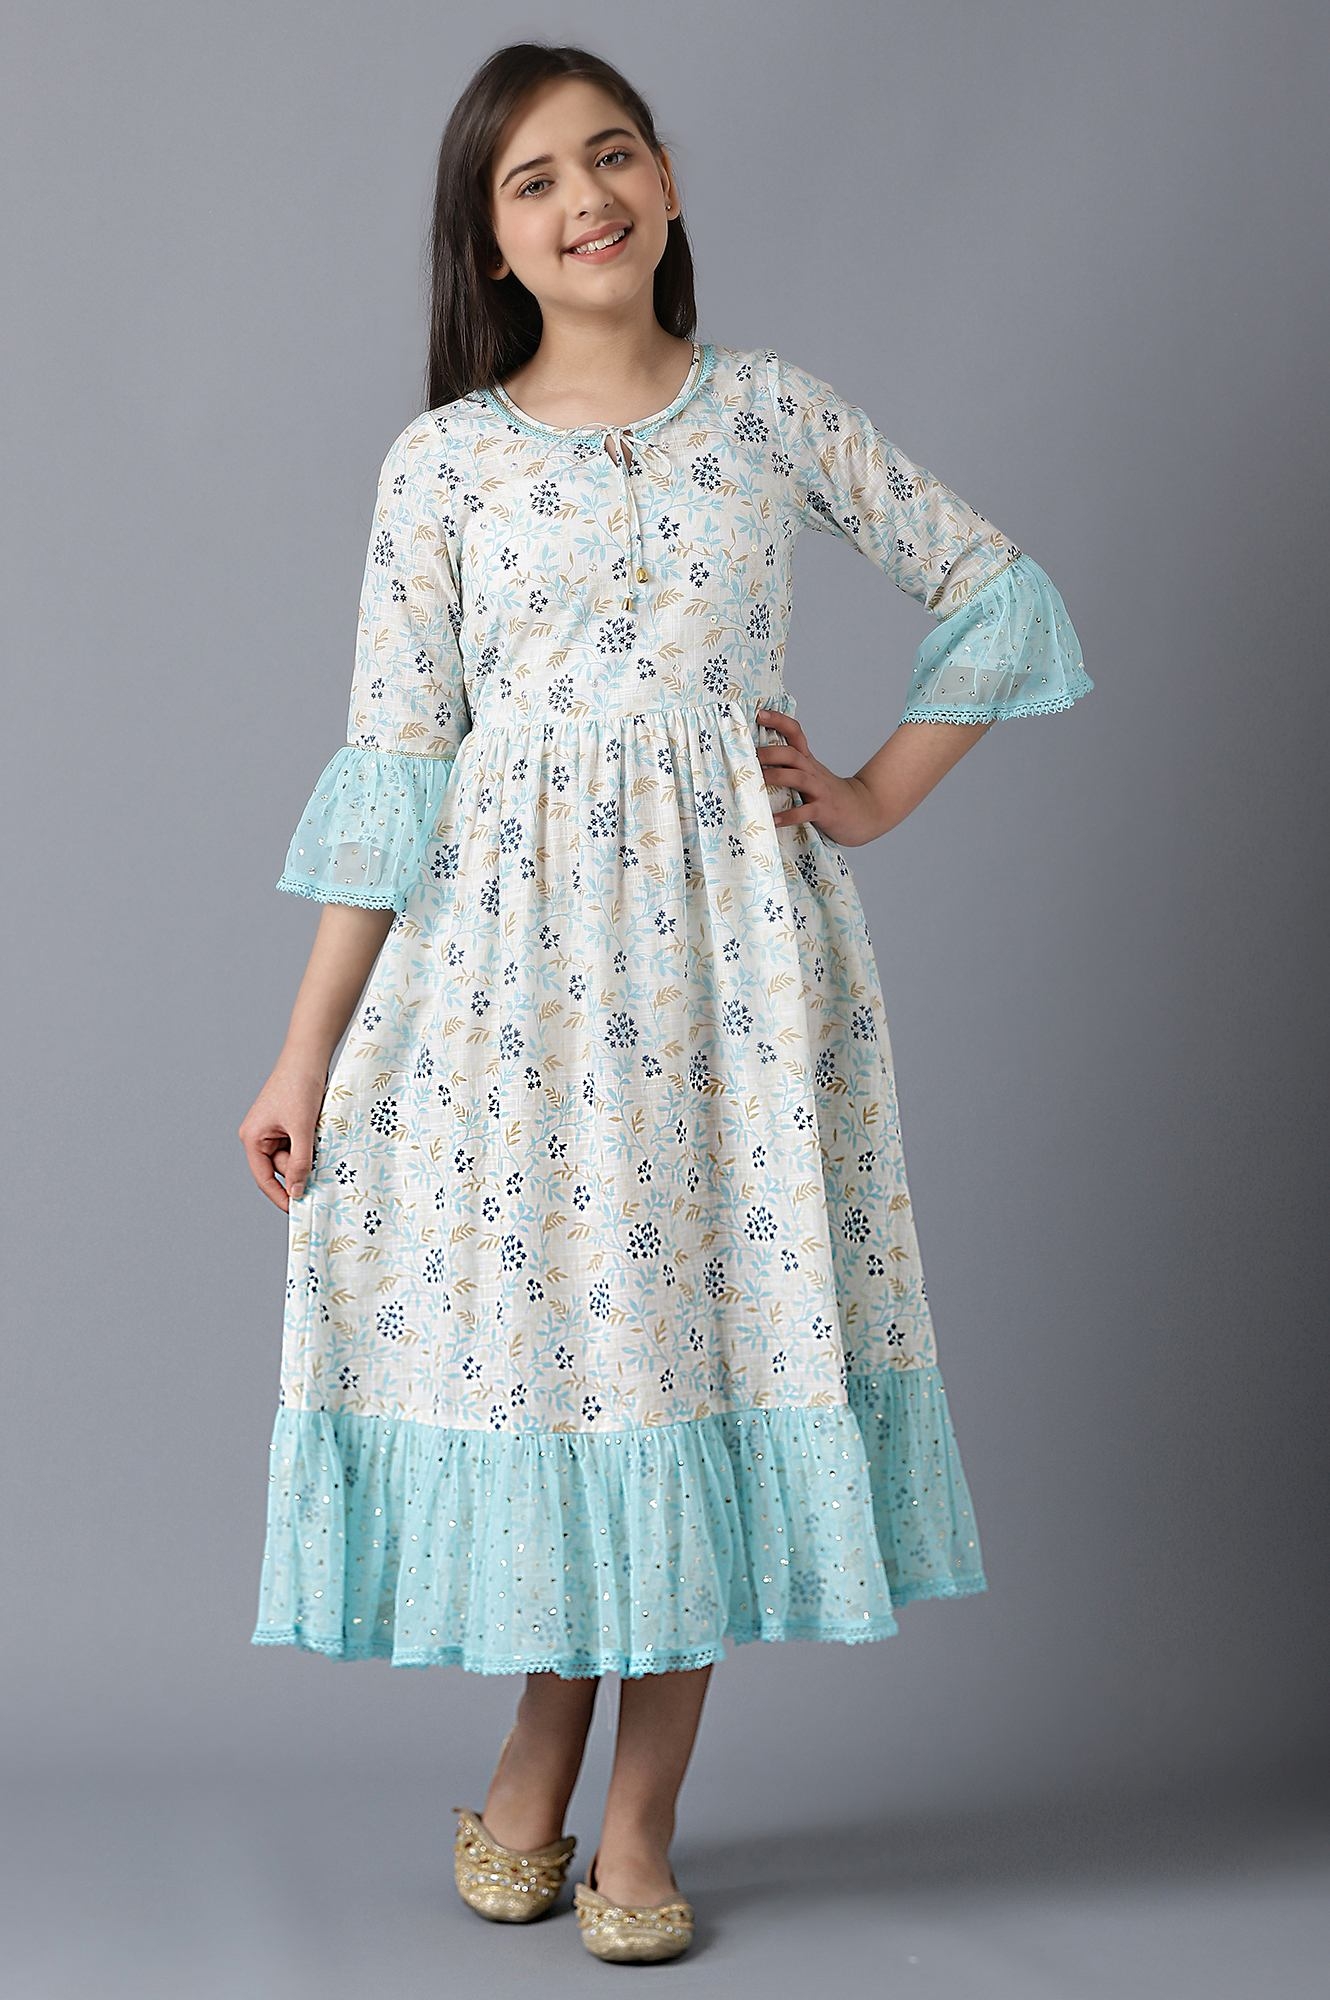 Aurelia | Girls White Cotton Printed Dress 